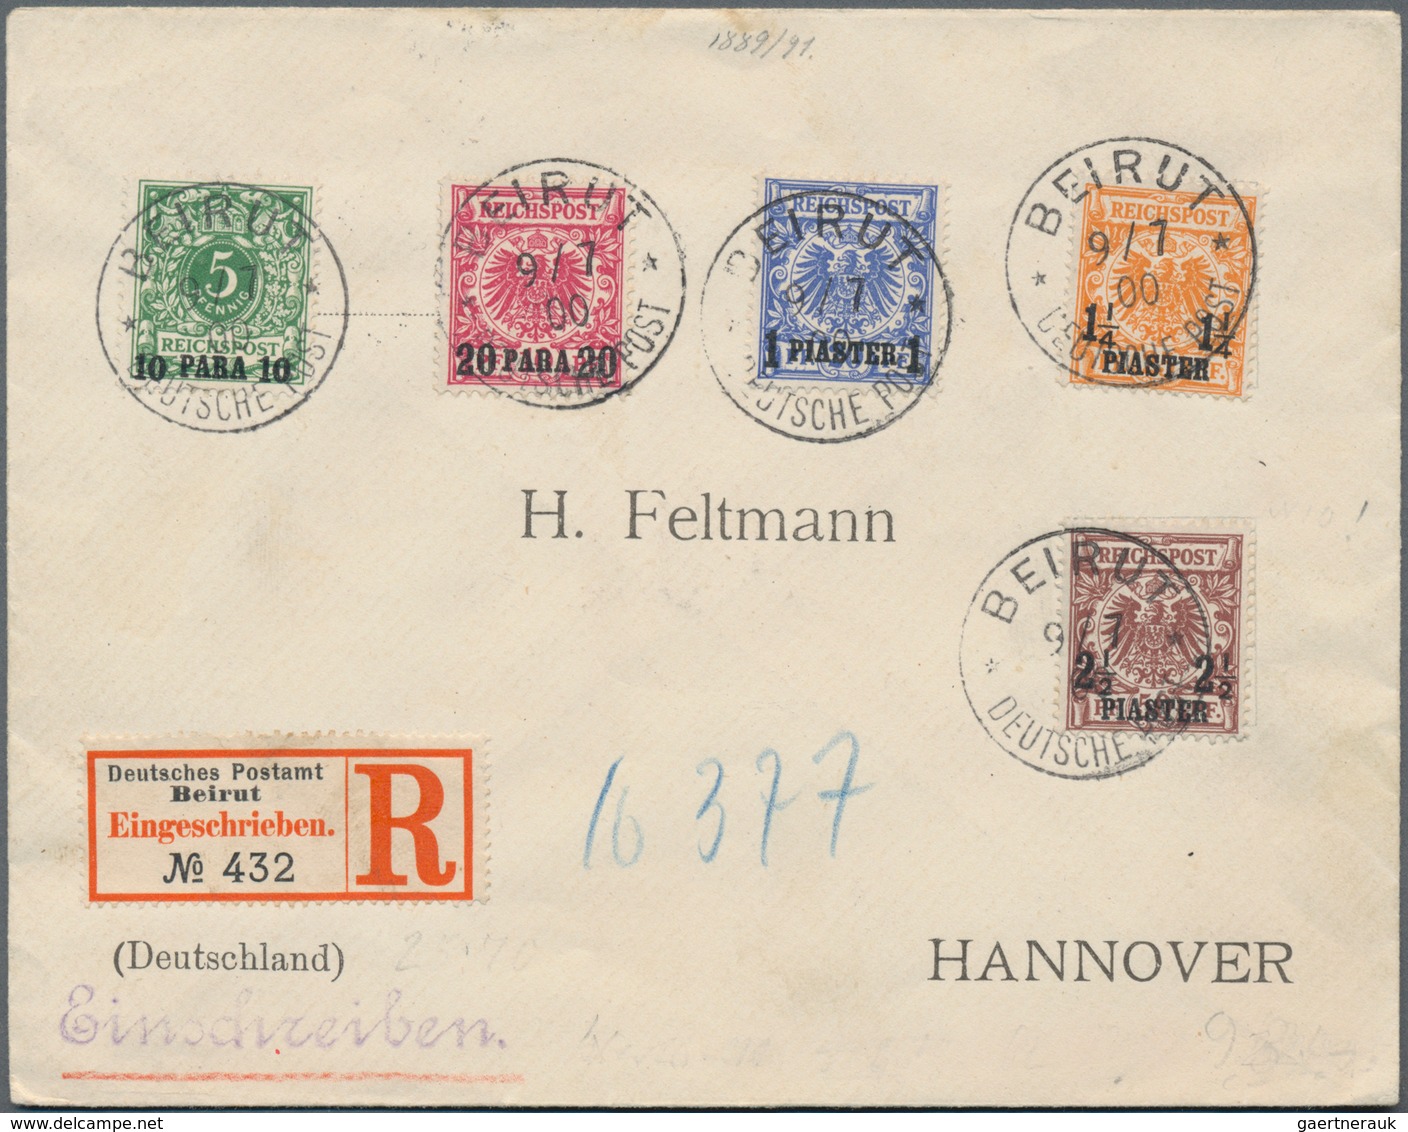 Deutsche Post in der Türkei: 1880/1905 (ca.), 39 Belege, zusätzlich 13 Belege Deutsche Post in Marok